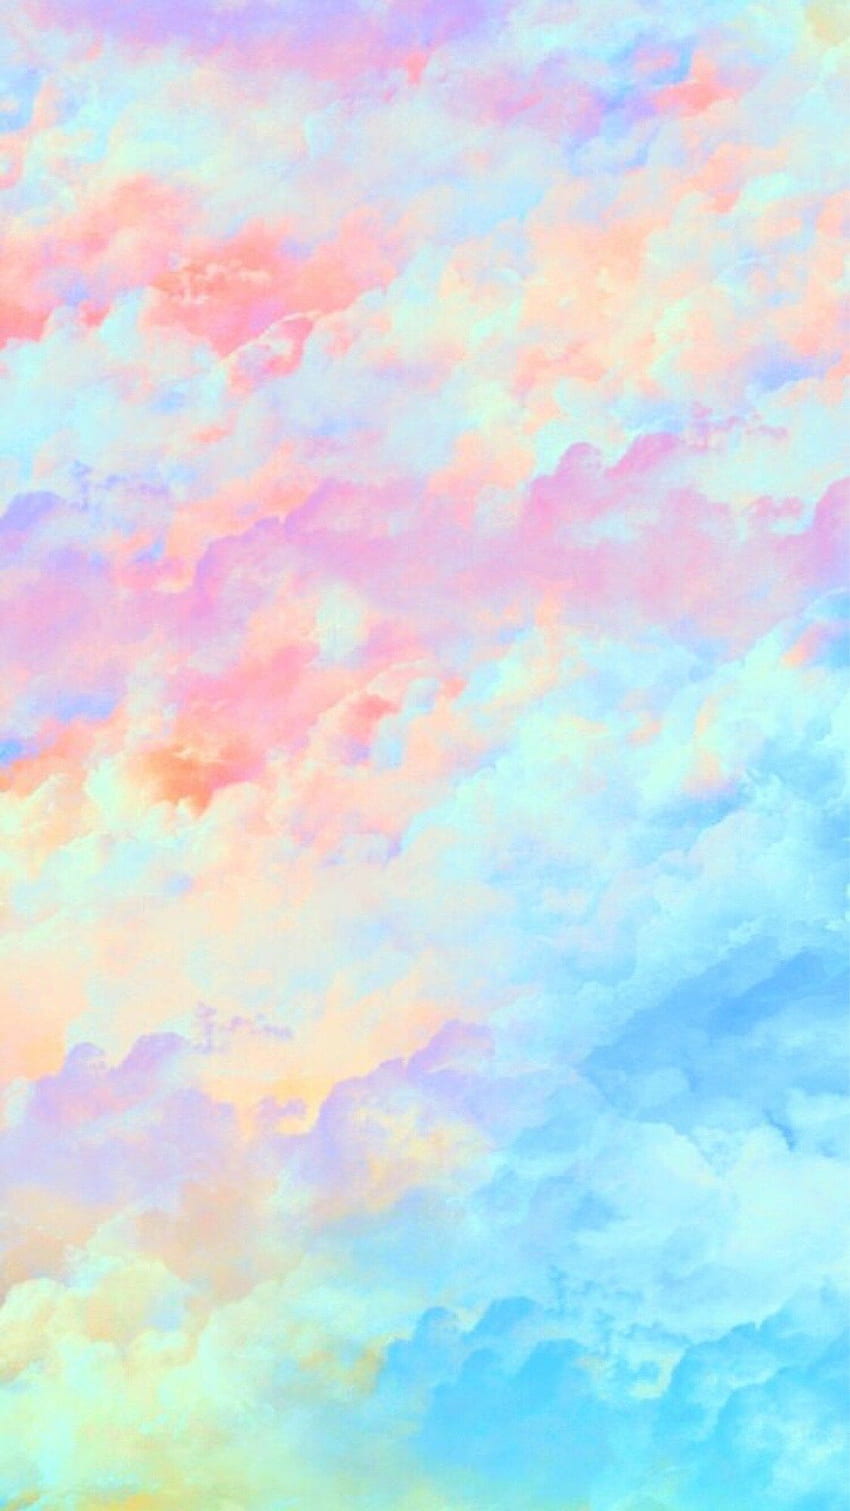 cielo arcoiris pastel fondo de pantalla del teléfono